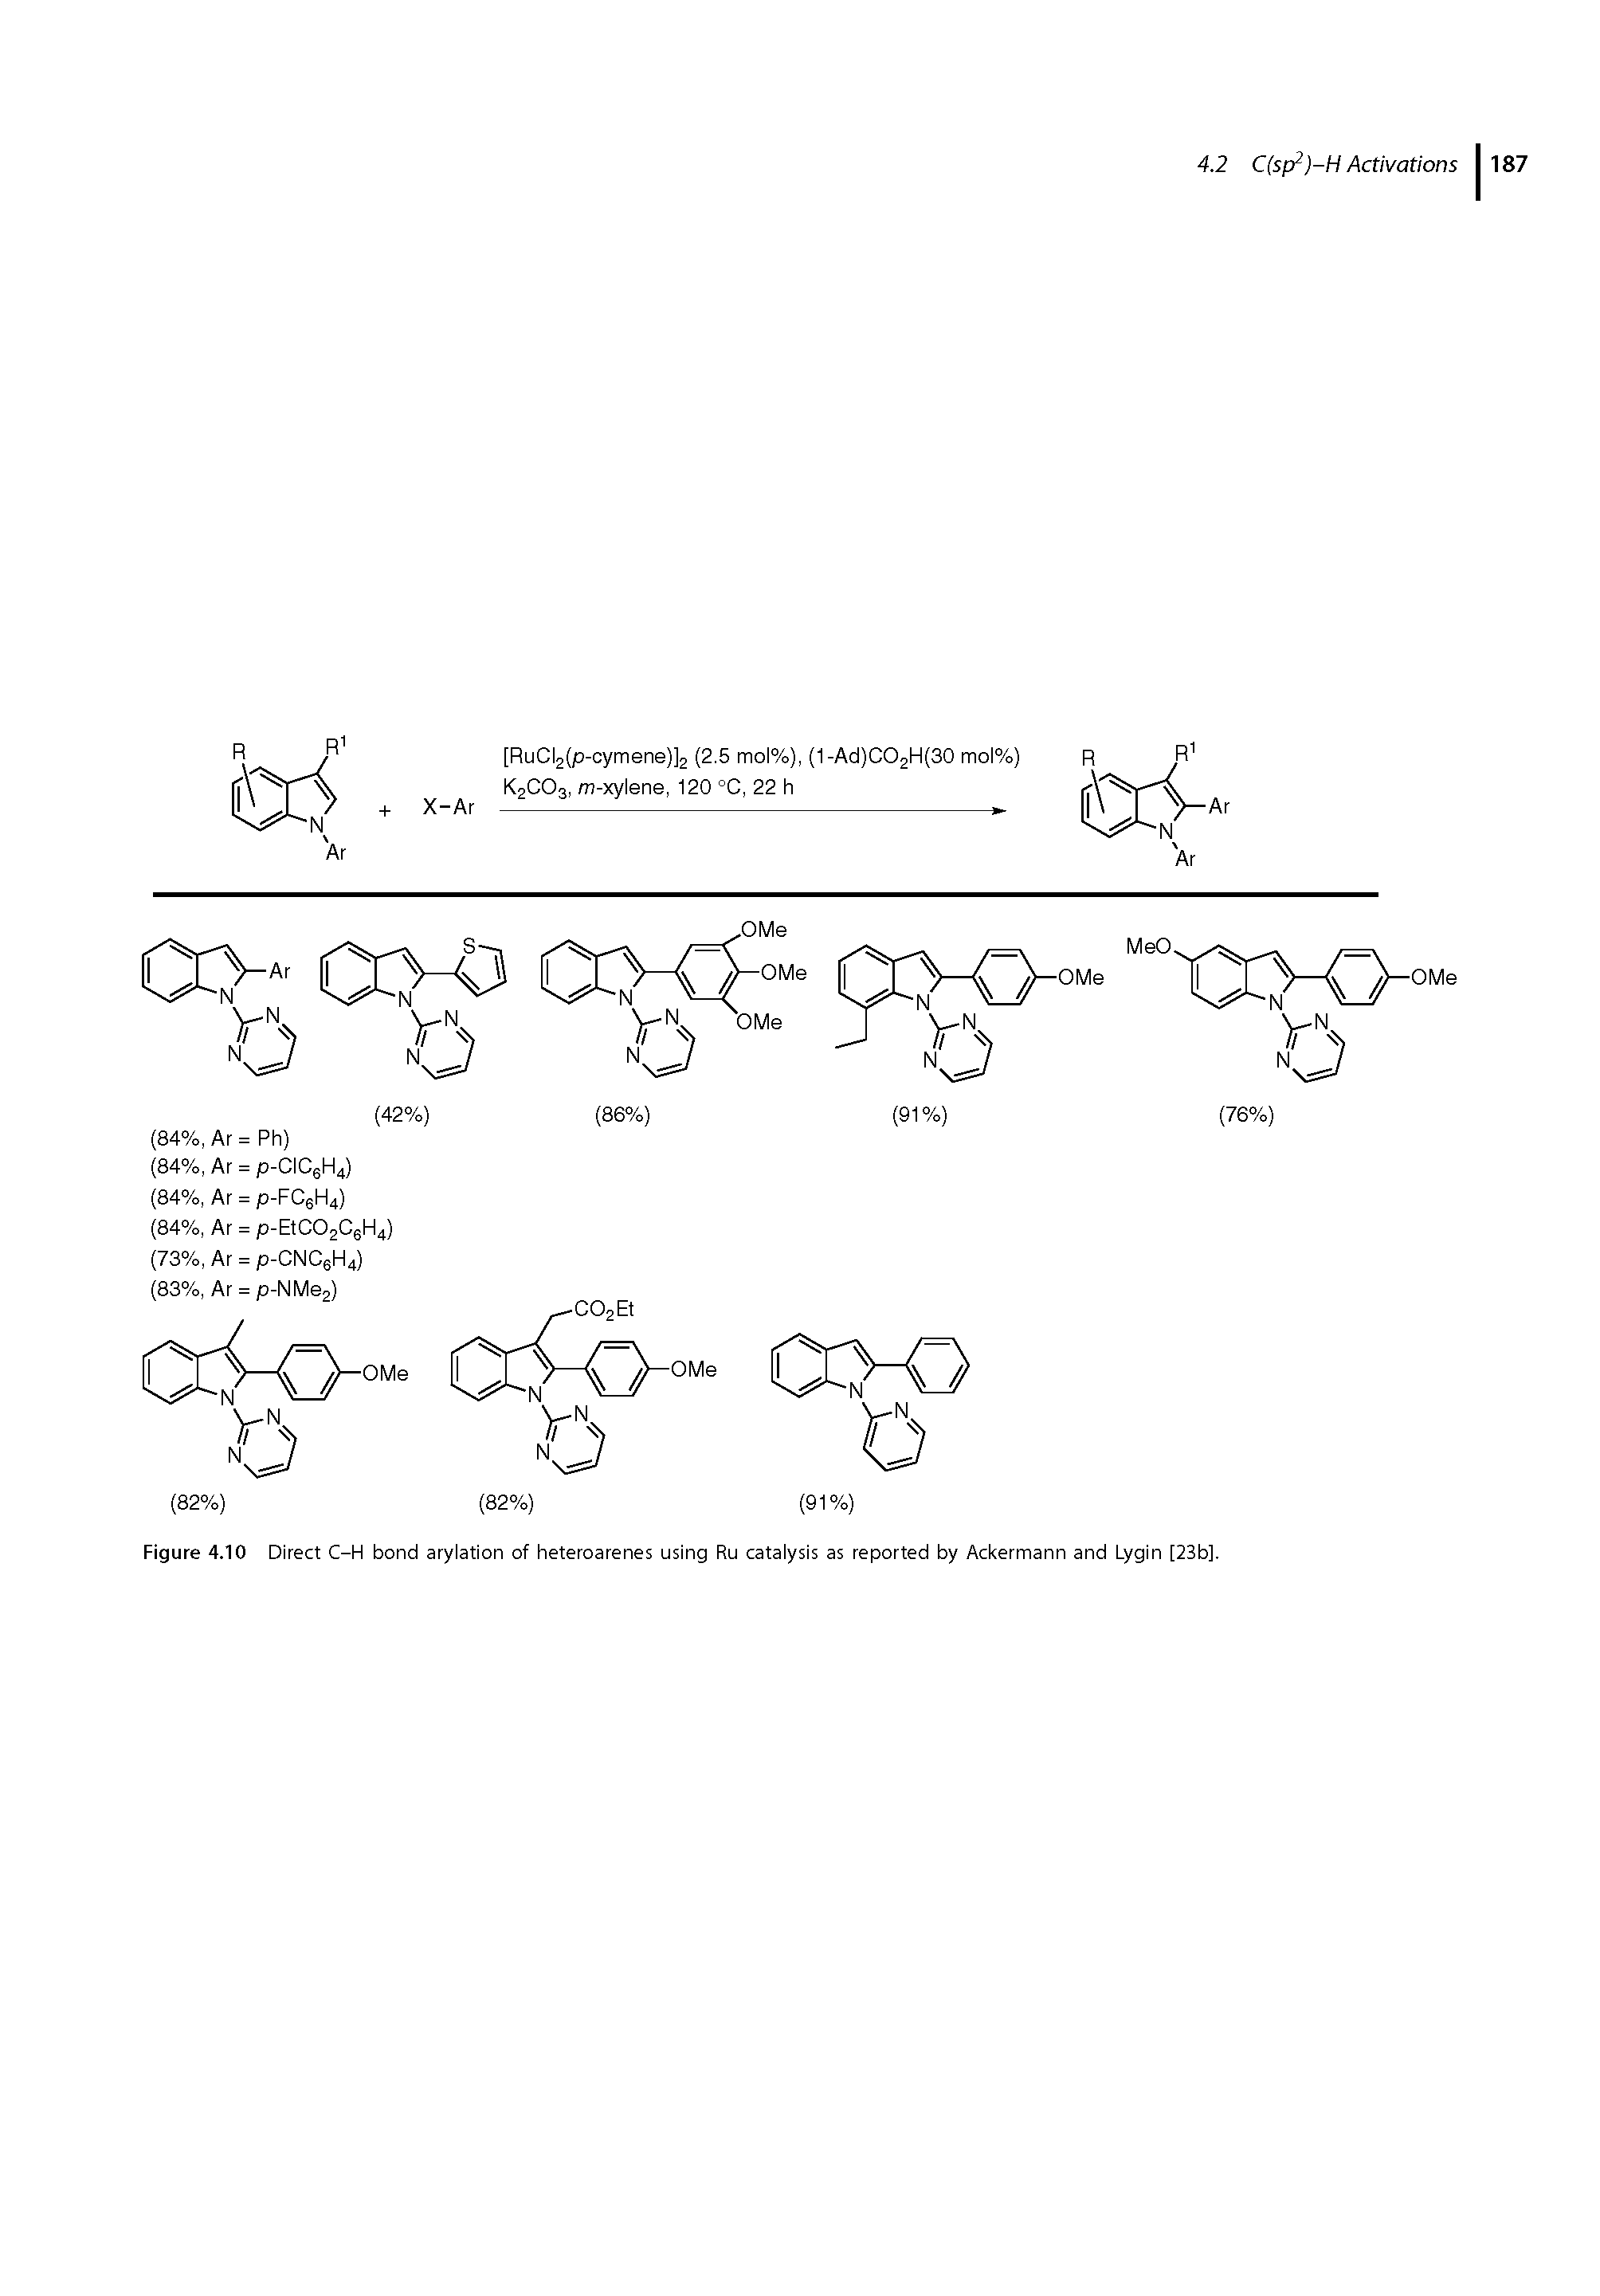 Figure 4.10 Direct C-H bond arylation of heteroarenes using Ru catalysis as reported by Ackermann and Lygin [23b].